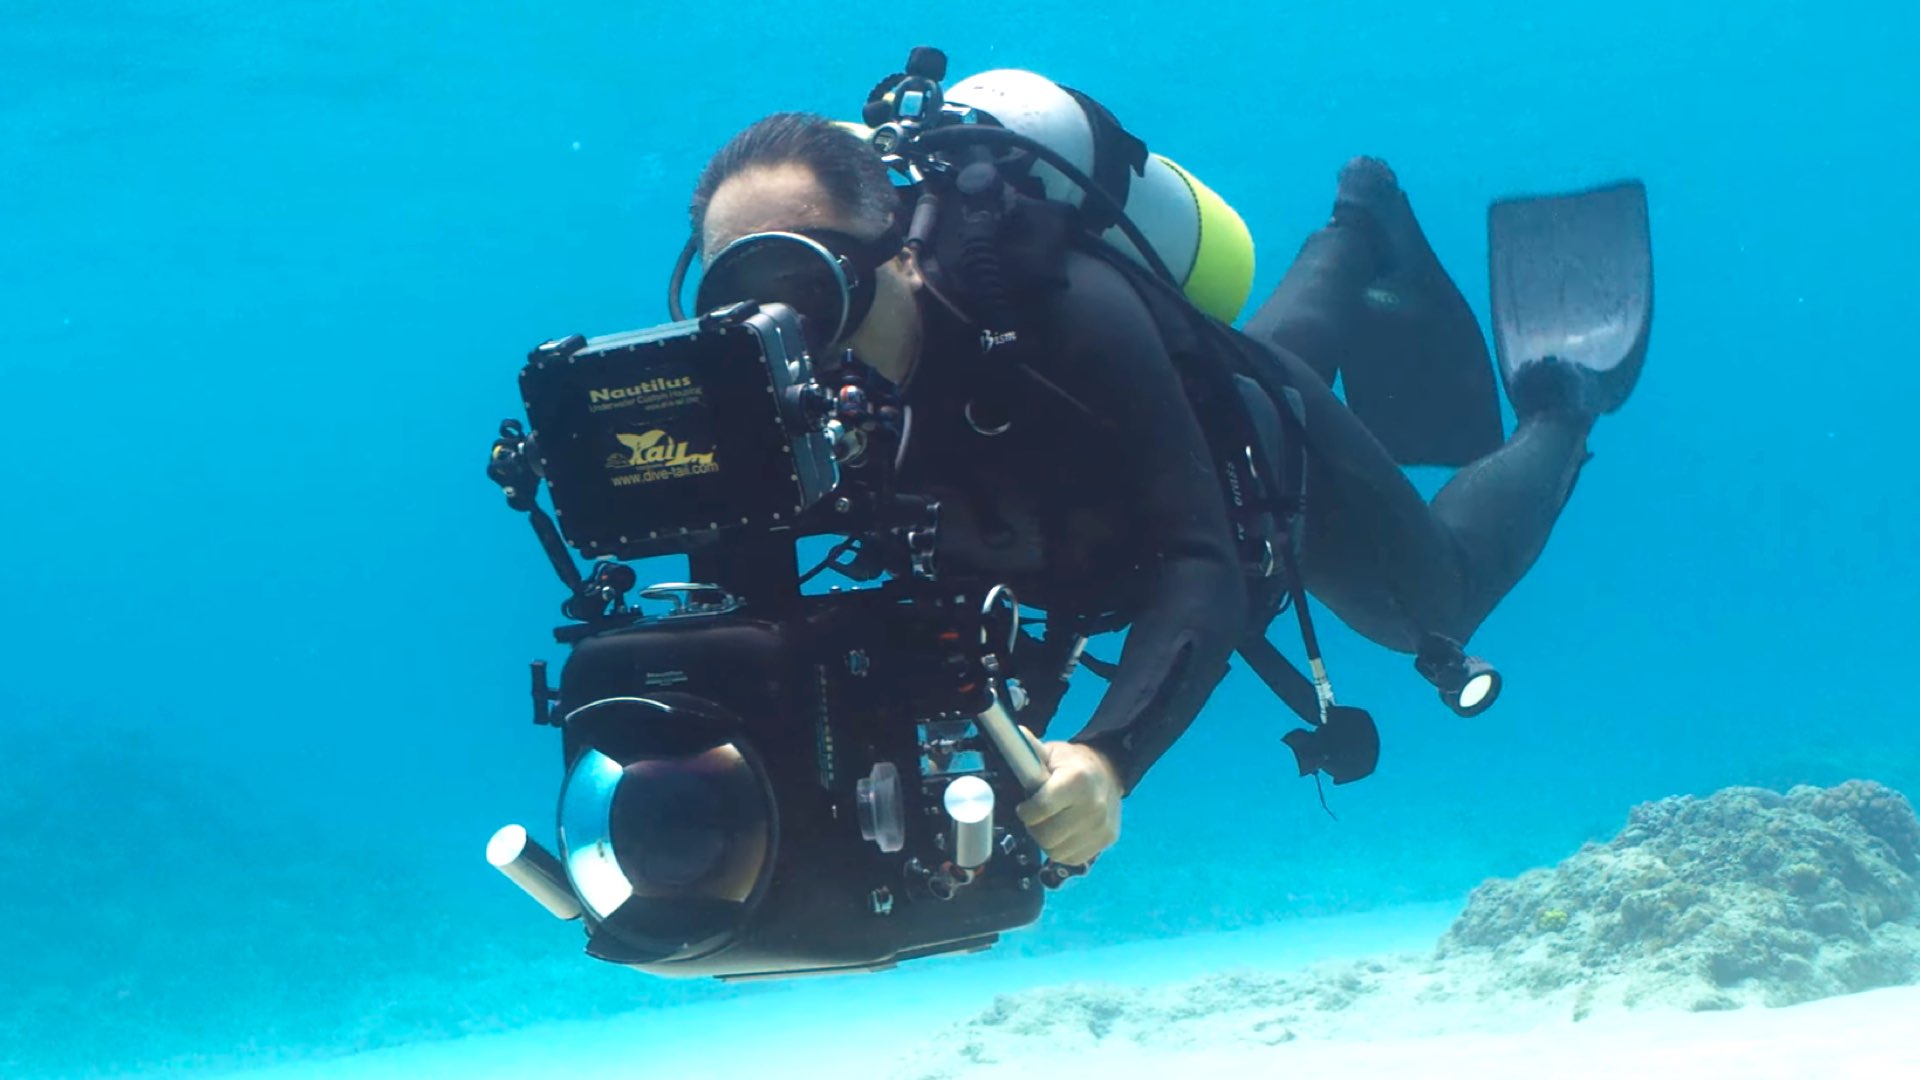 Shooting Underwater With the ARRi ALEXA 35